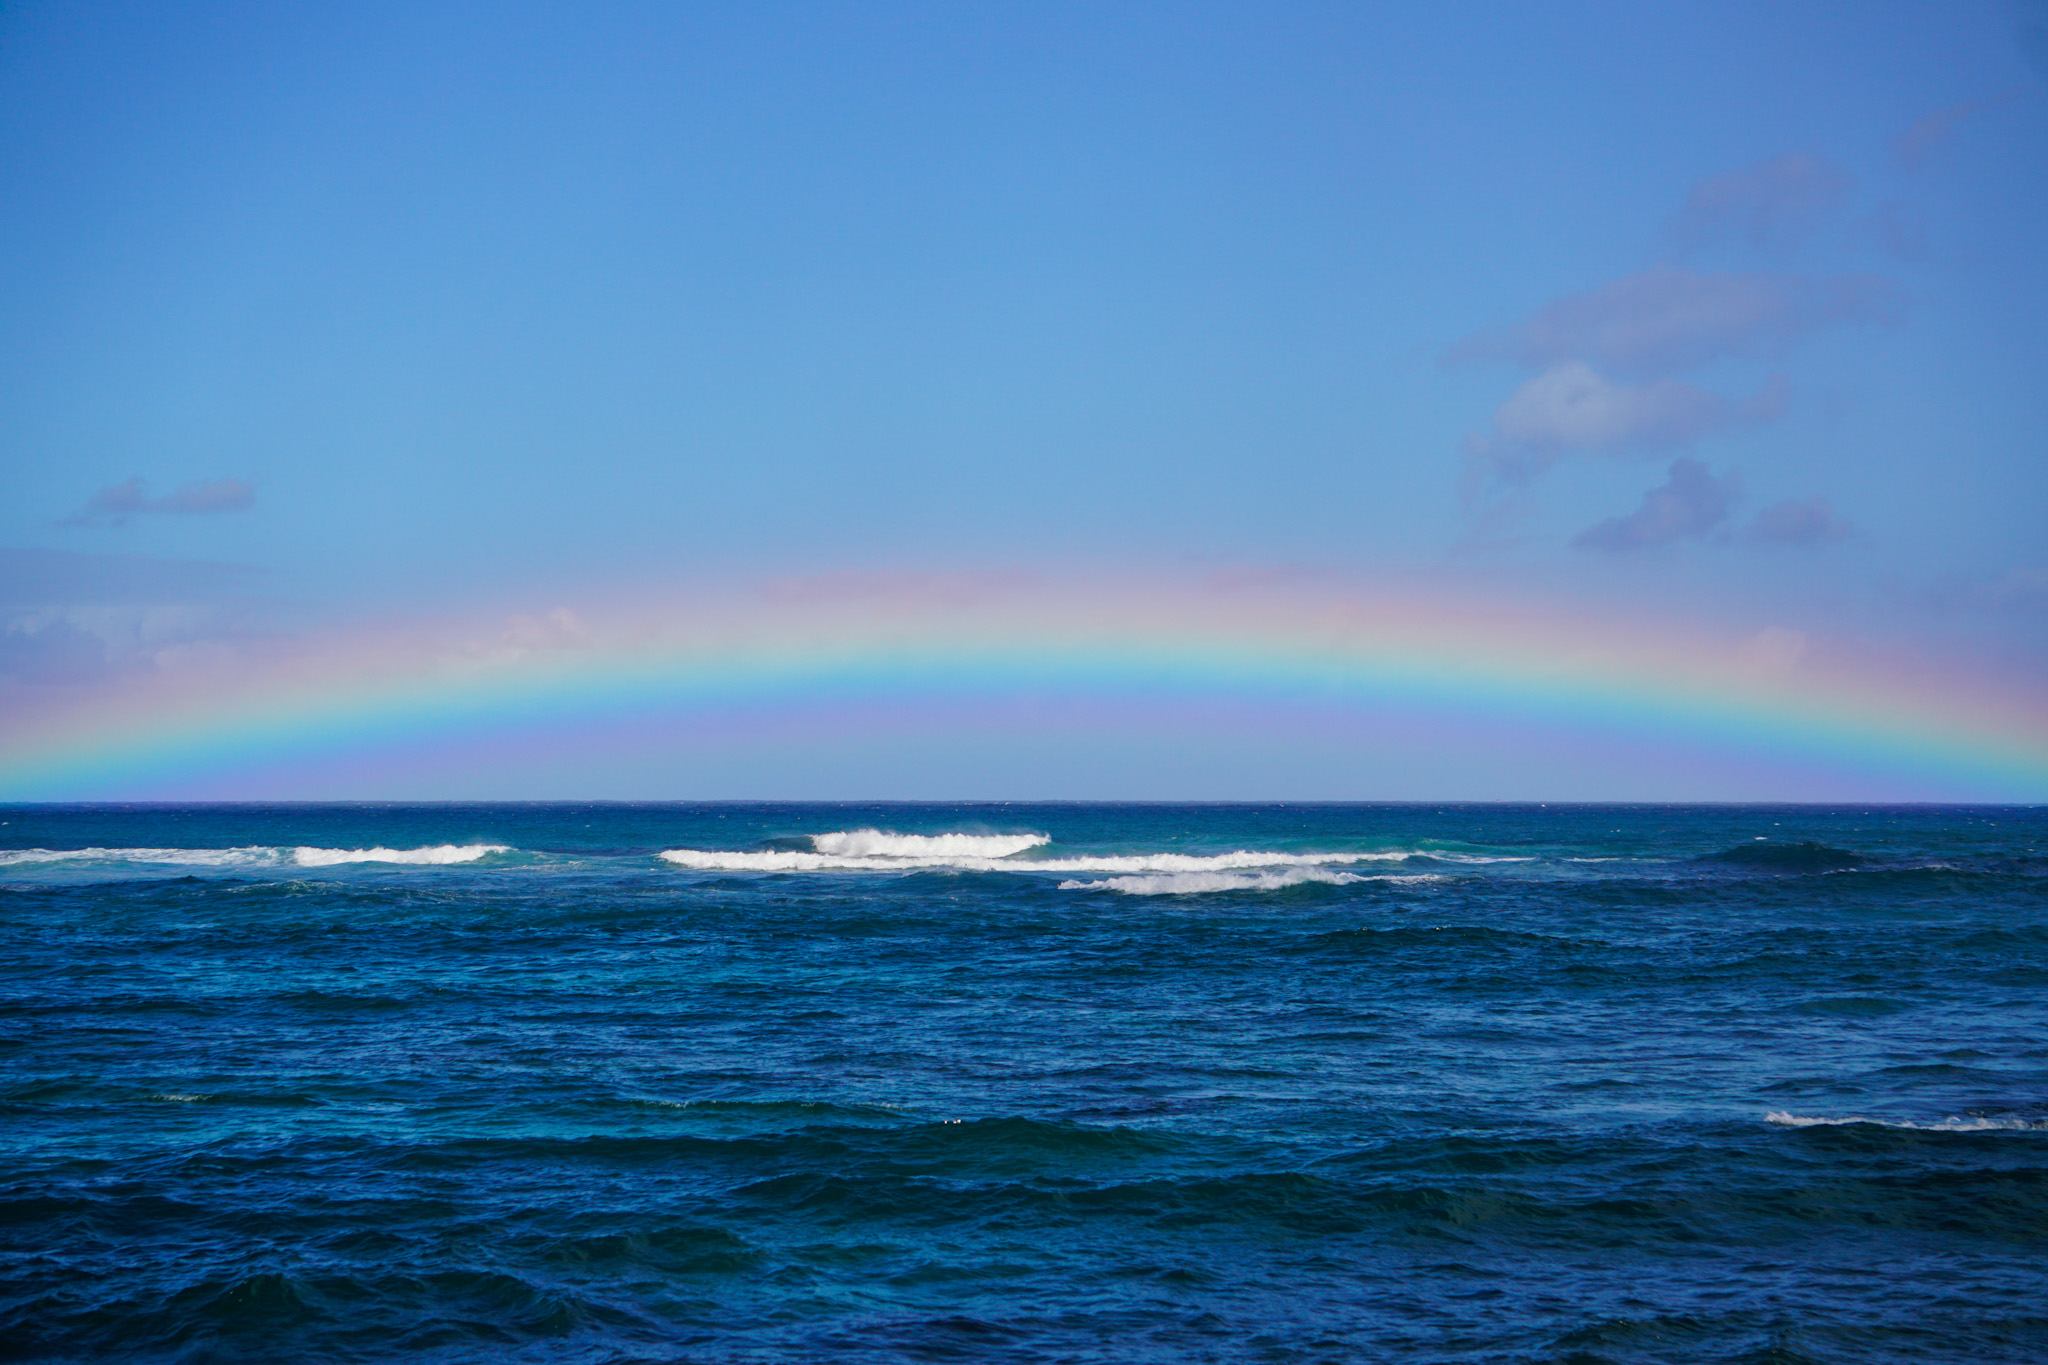 Vibrant rainbow over the blue ocean at Laniakea, Oahu Hawaii